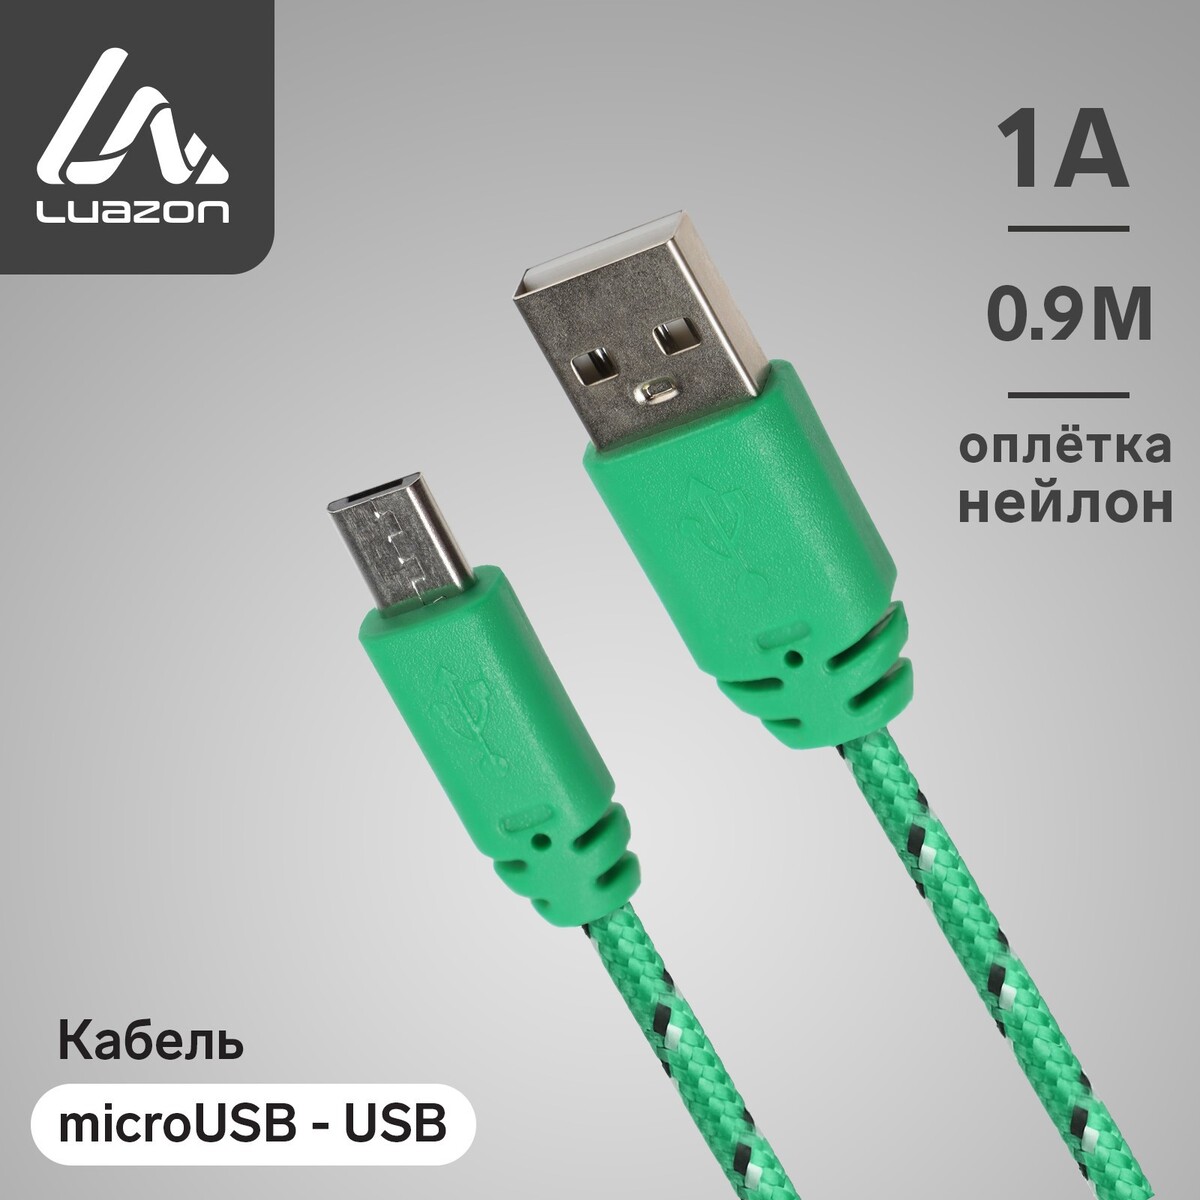 Кабель luazon, microusb - usb, 1 а, 0,9 м, оплетка нейлон, зеленый кабель luazon microusb usb 1 а 0 9 м оплетка нейлон белый